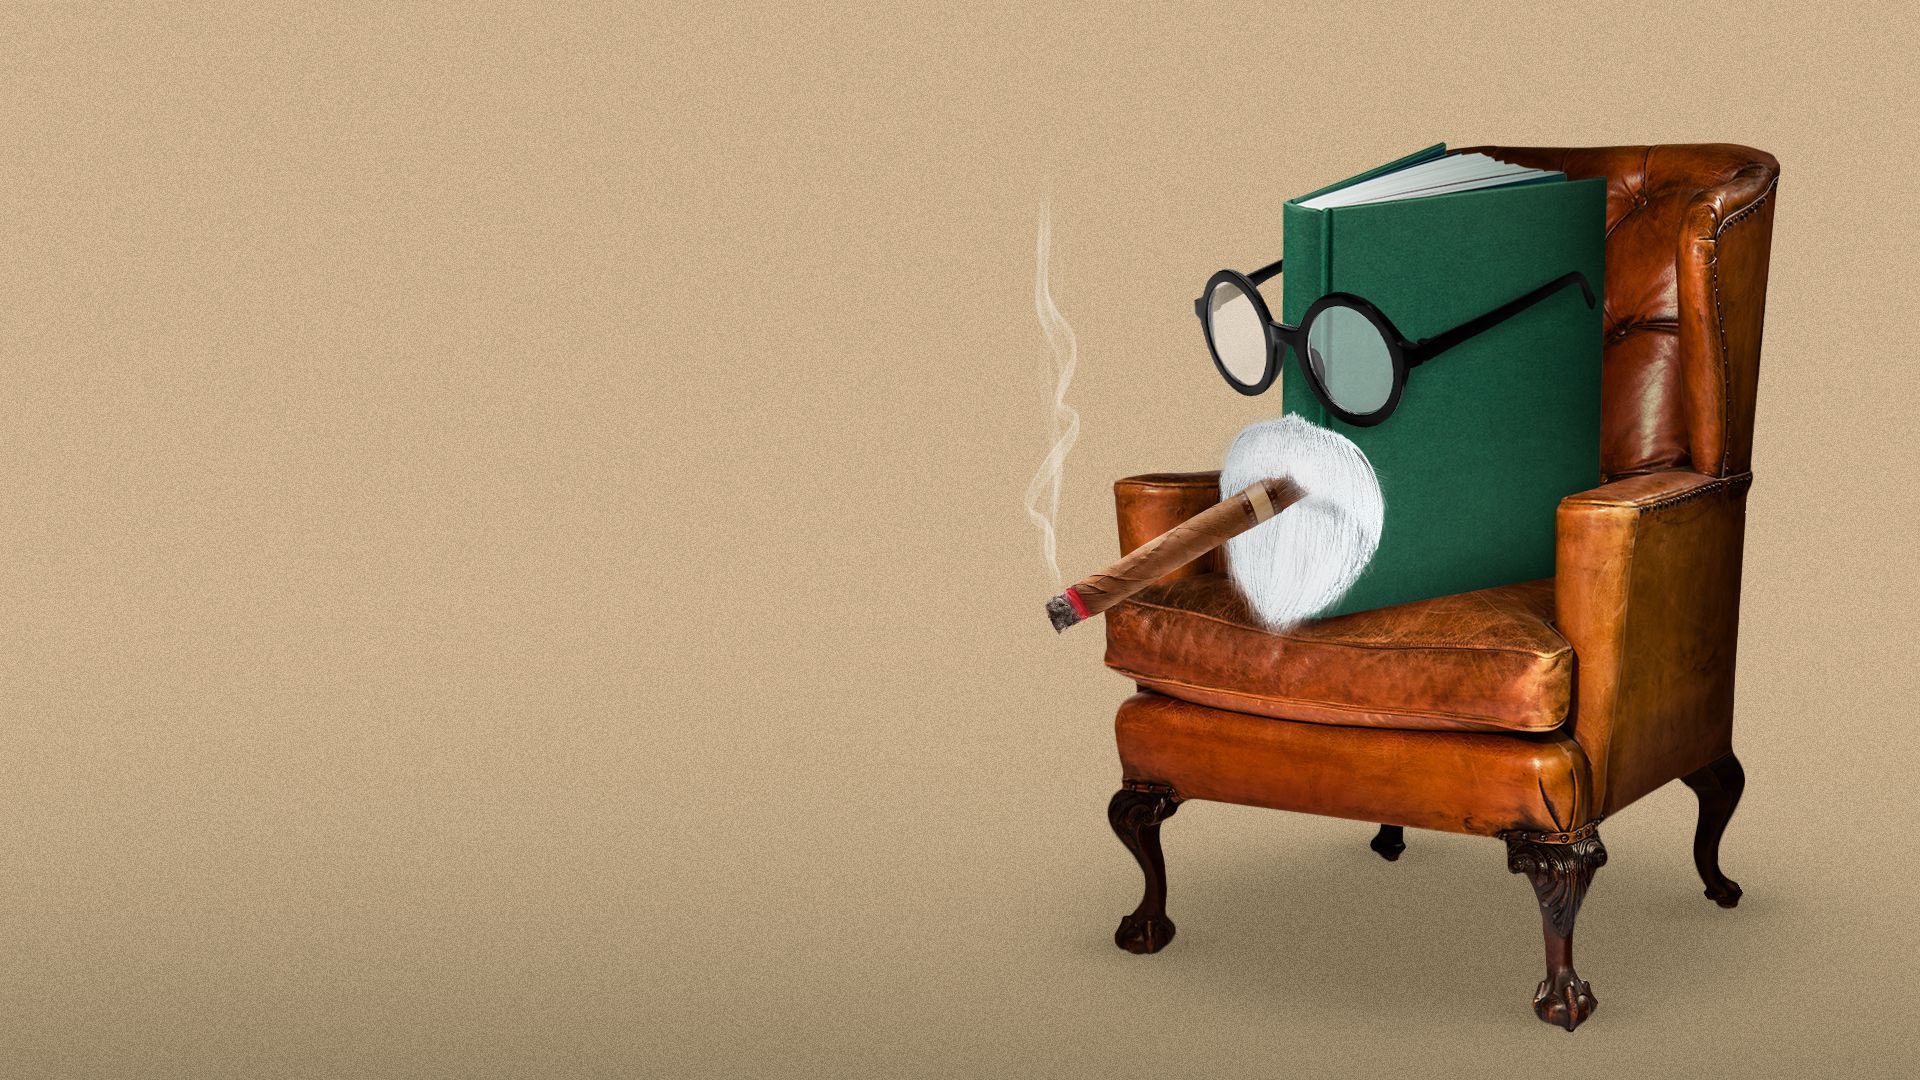 Illustration of a book as Sigmund Freud smoking a cigar in a psychiatrist's chair.